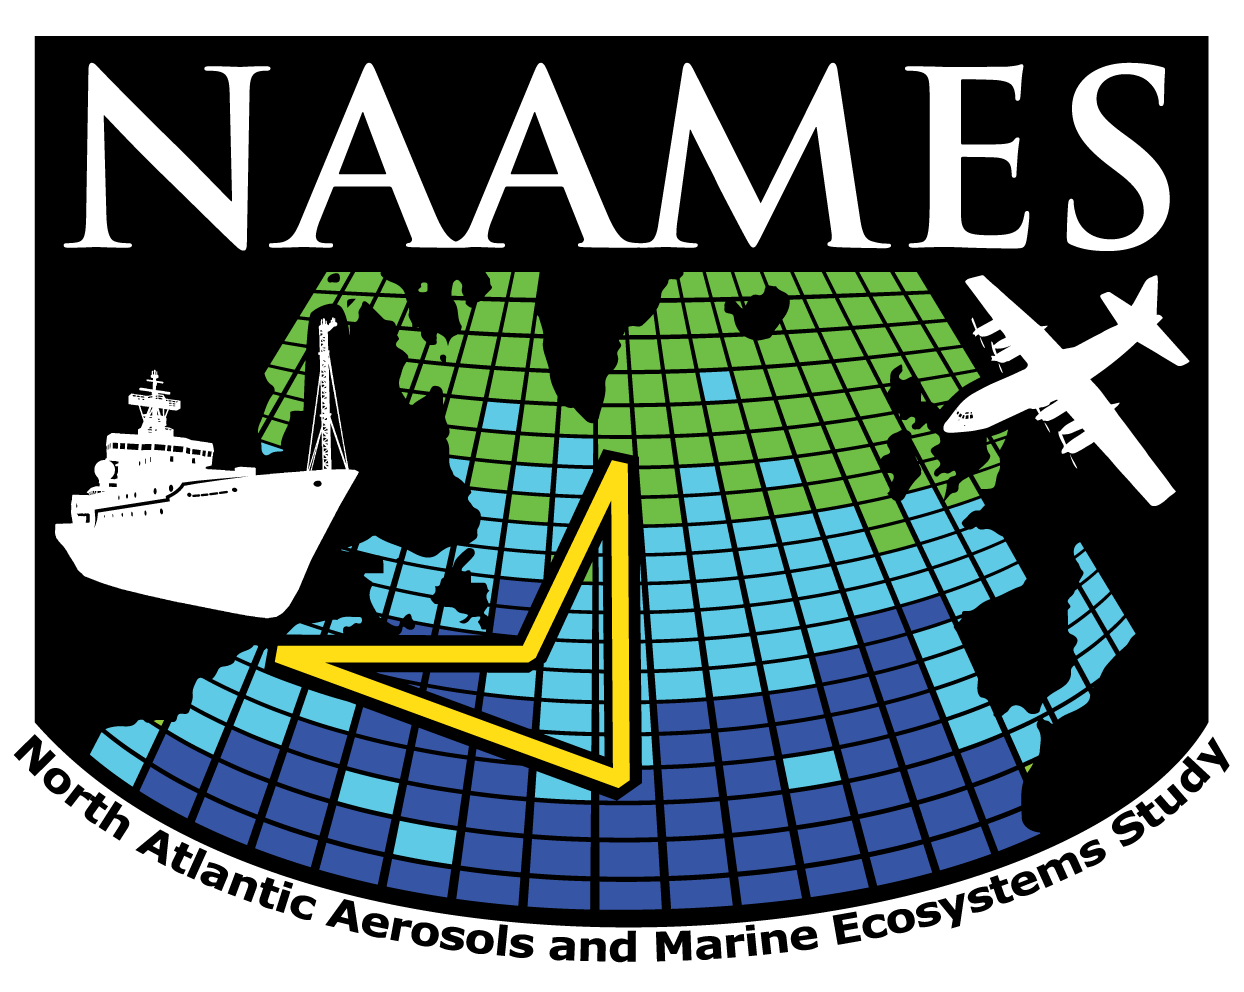 NAAMES logo